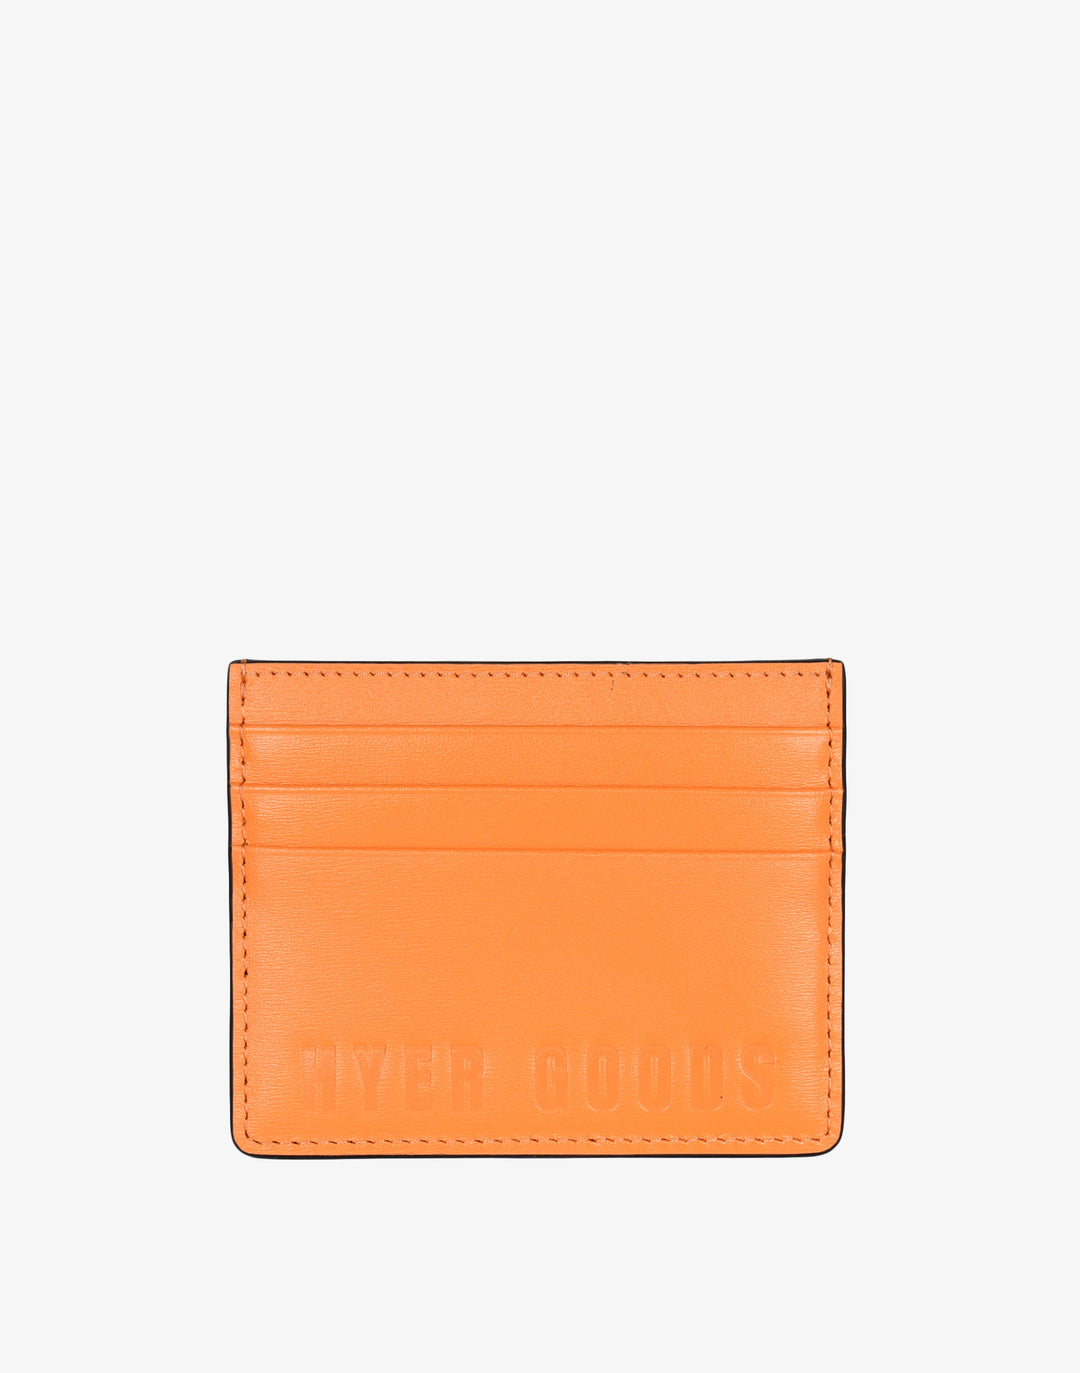 Hyer Goods_Card Wallet_neon orange_#color_neon-orange